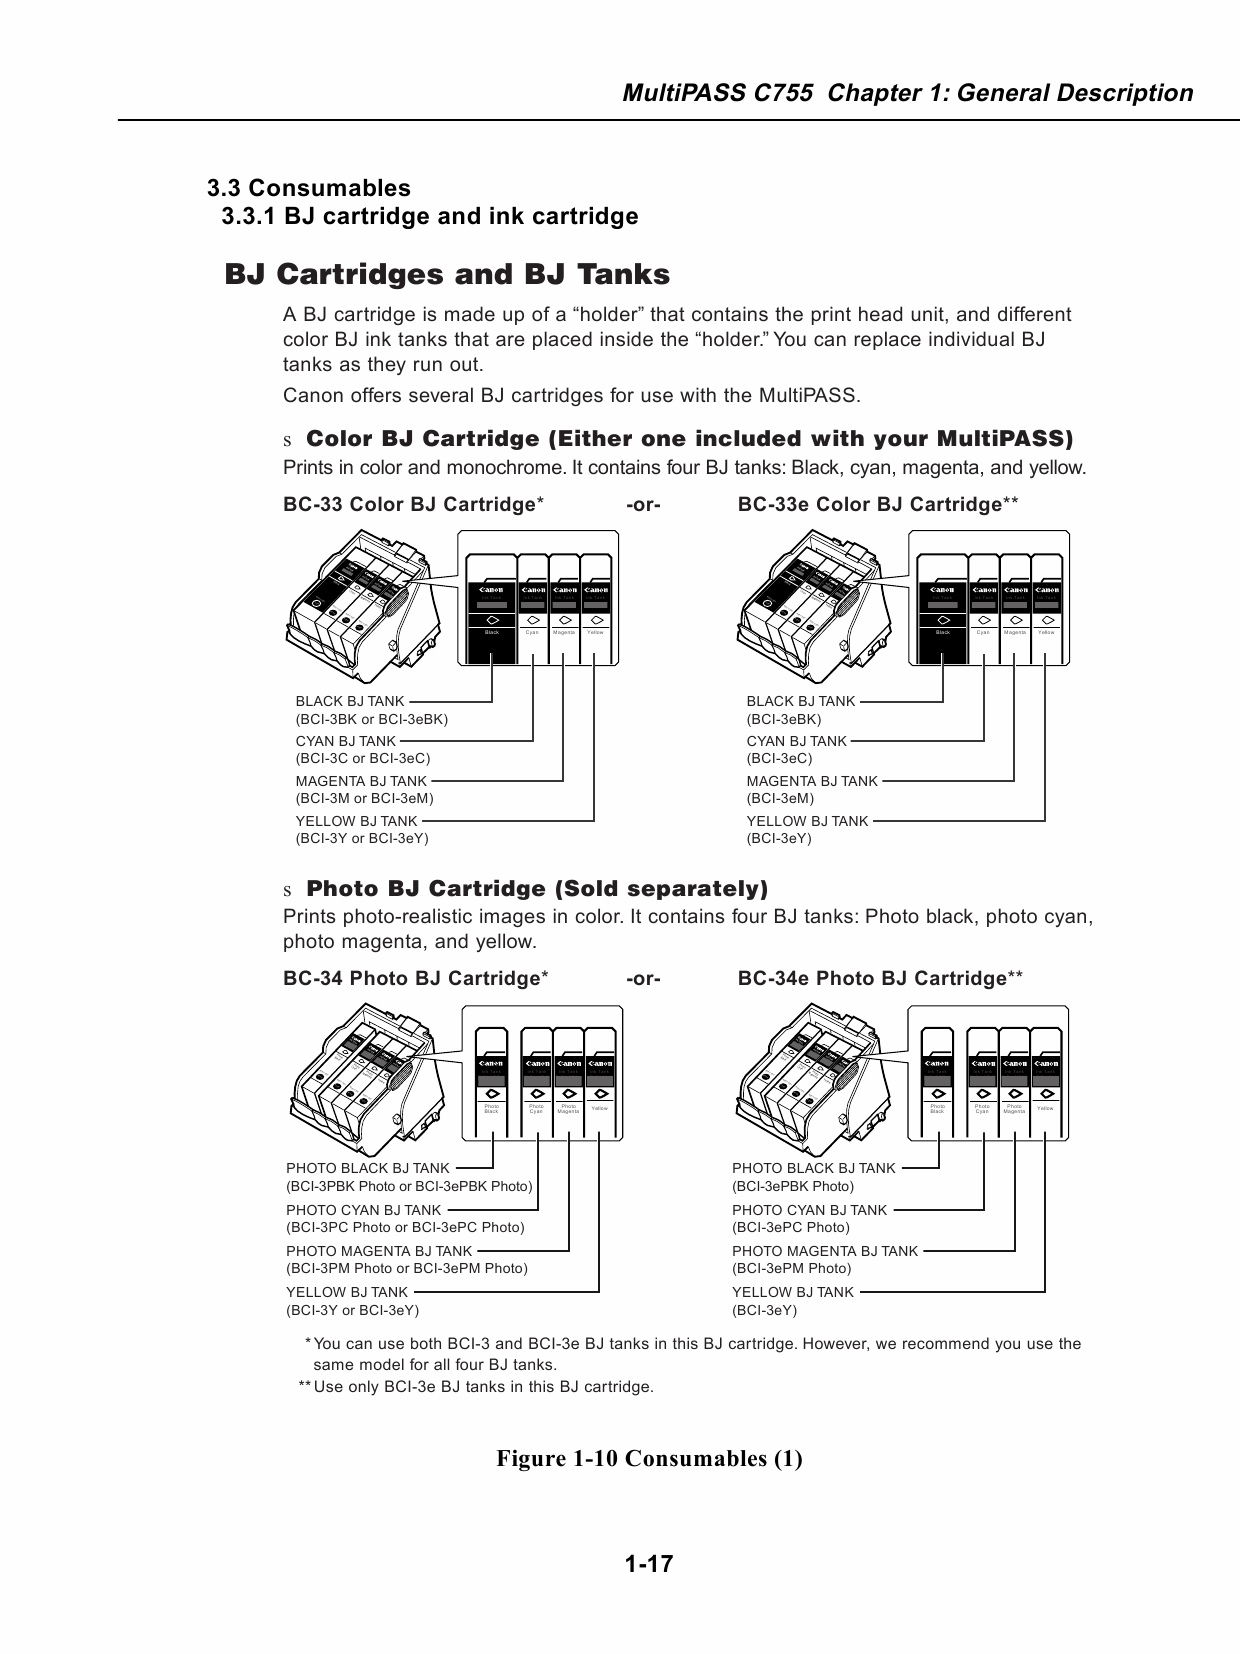 Canon MultiPASS MP-C755 Service Manual-2